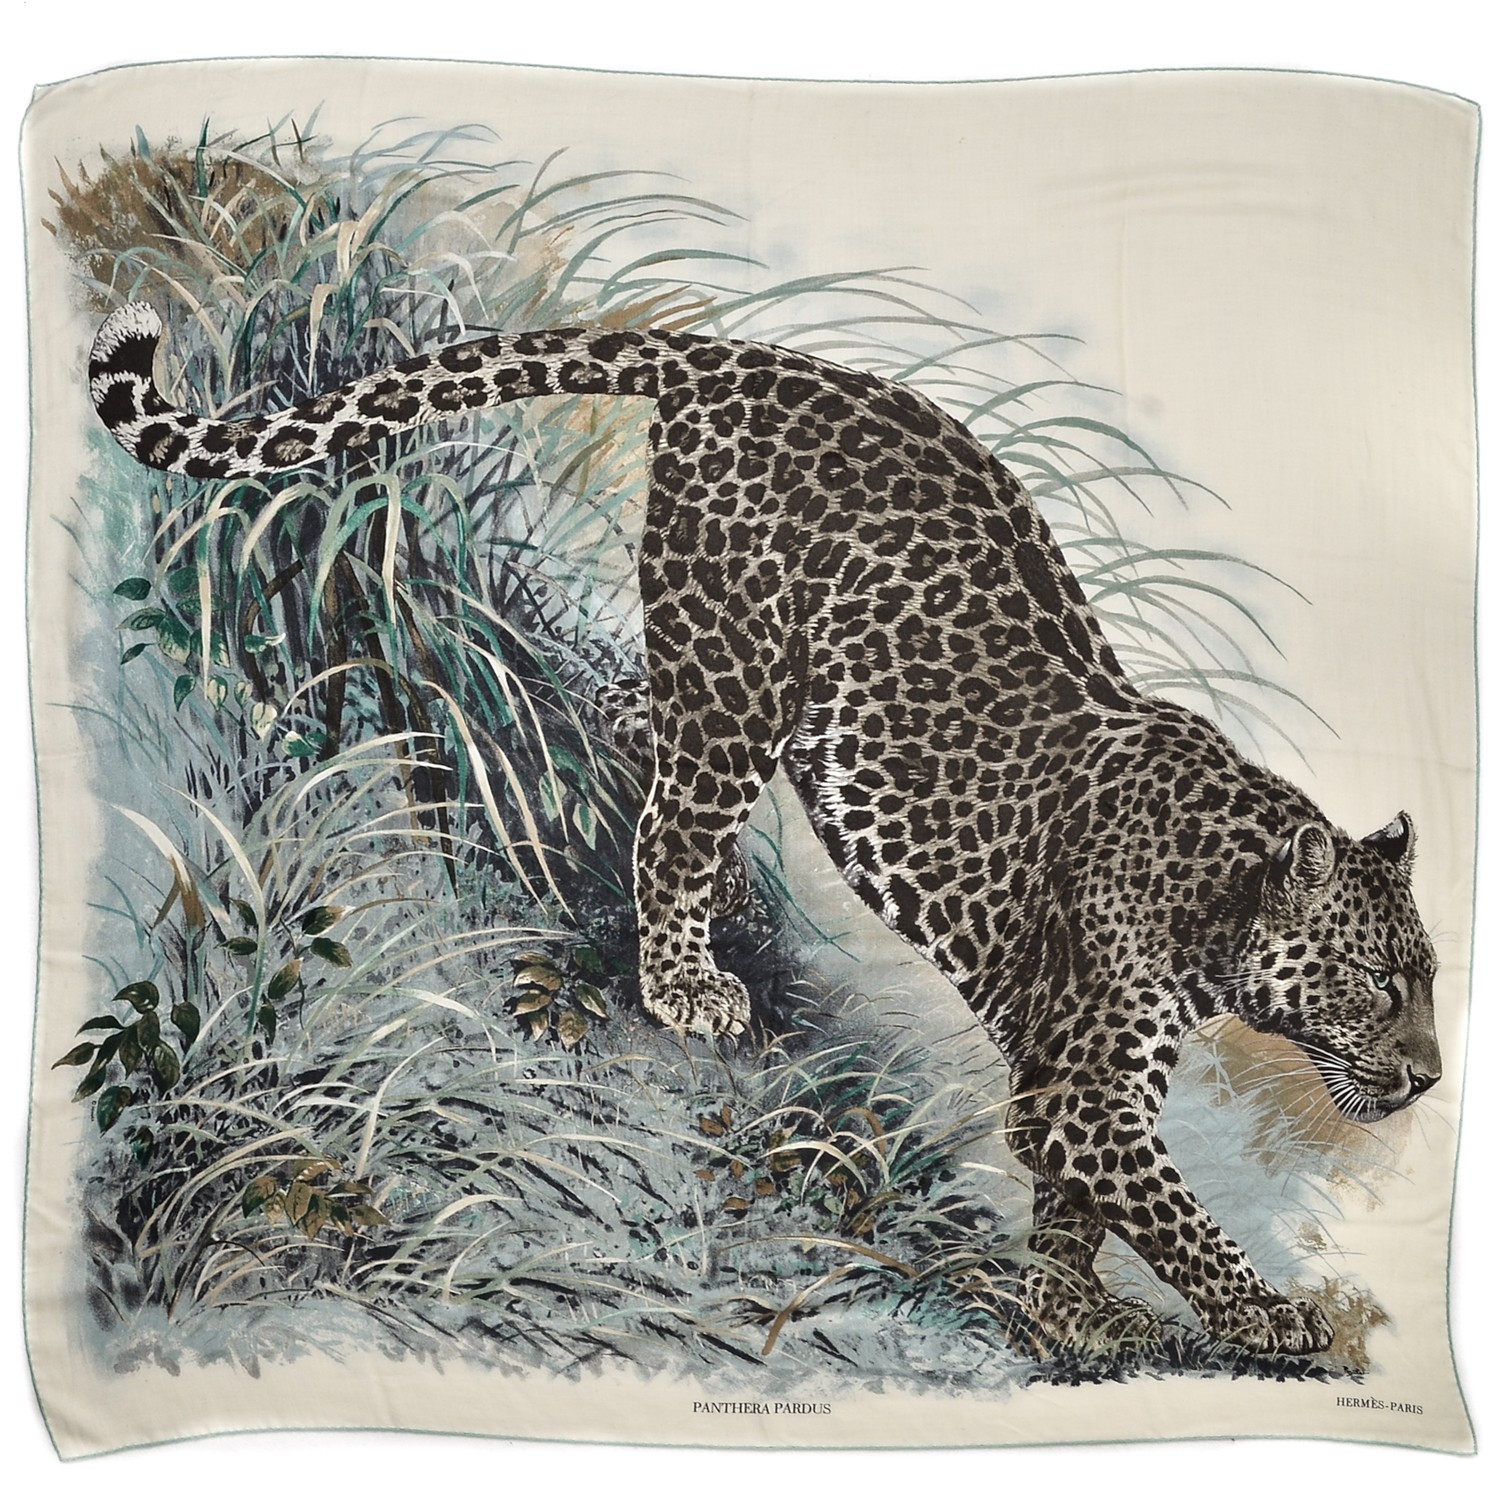 hermes leopard scarf